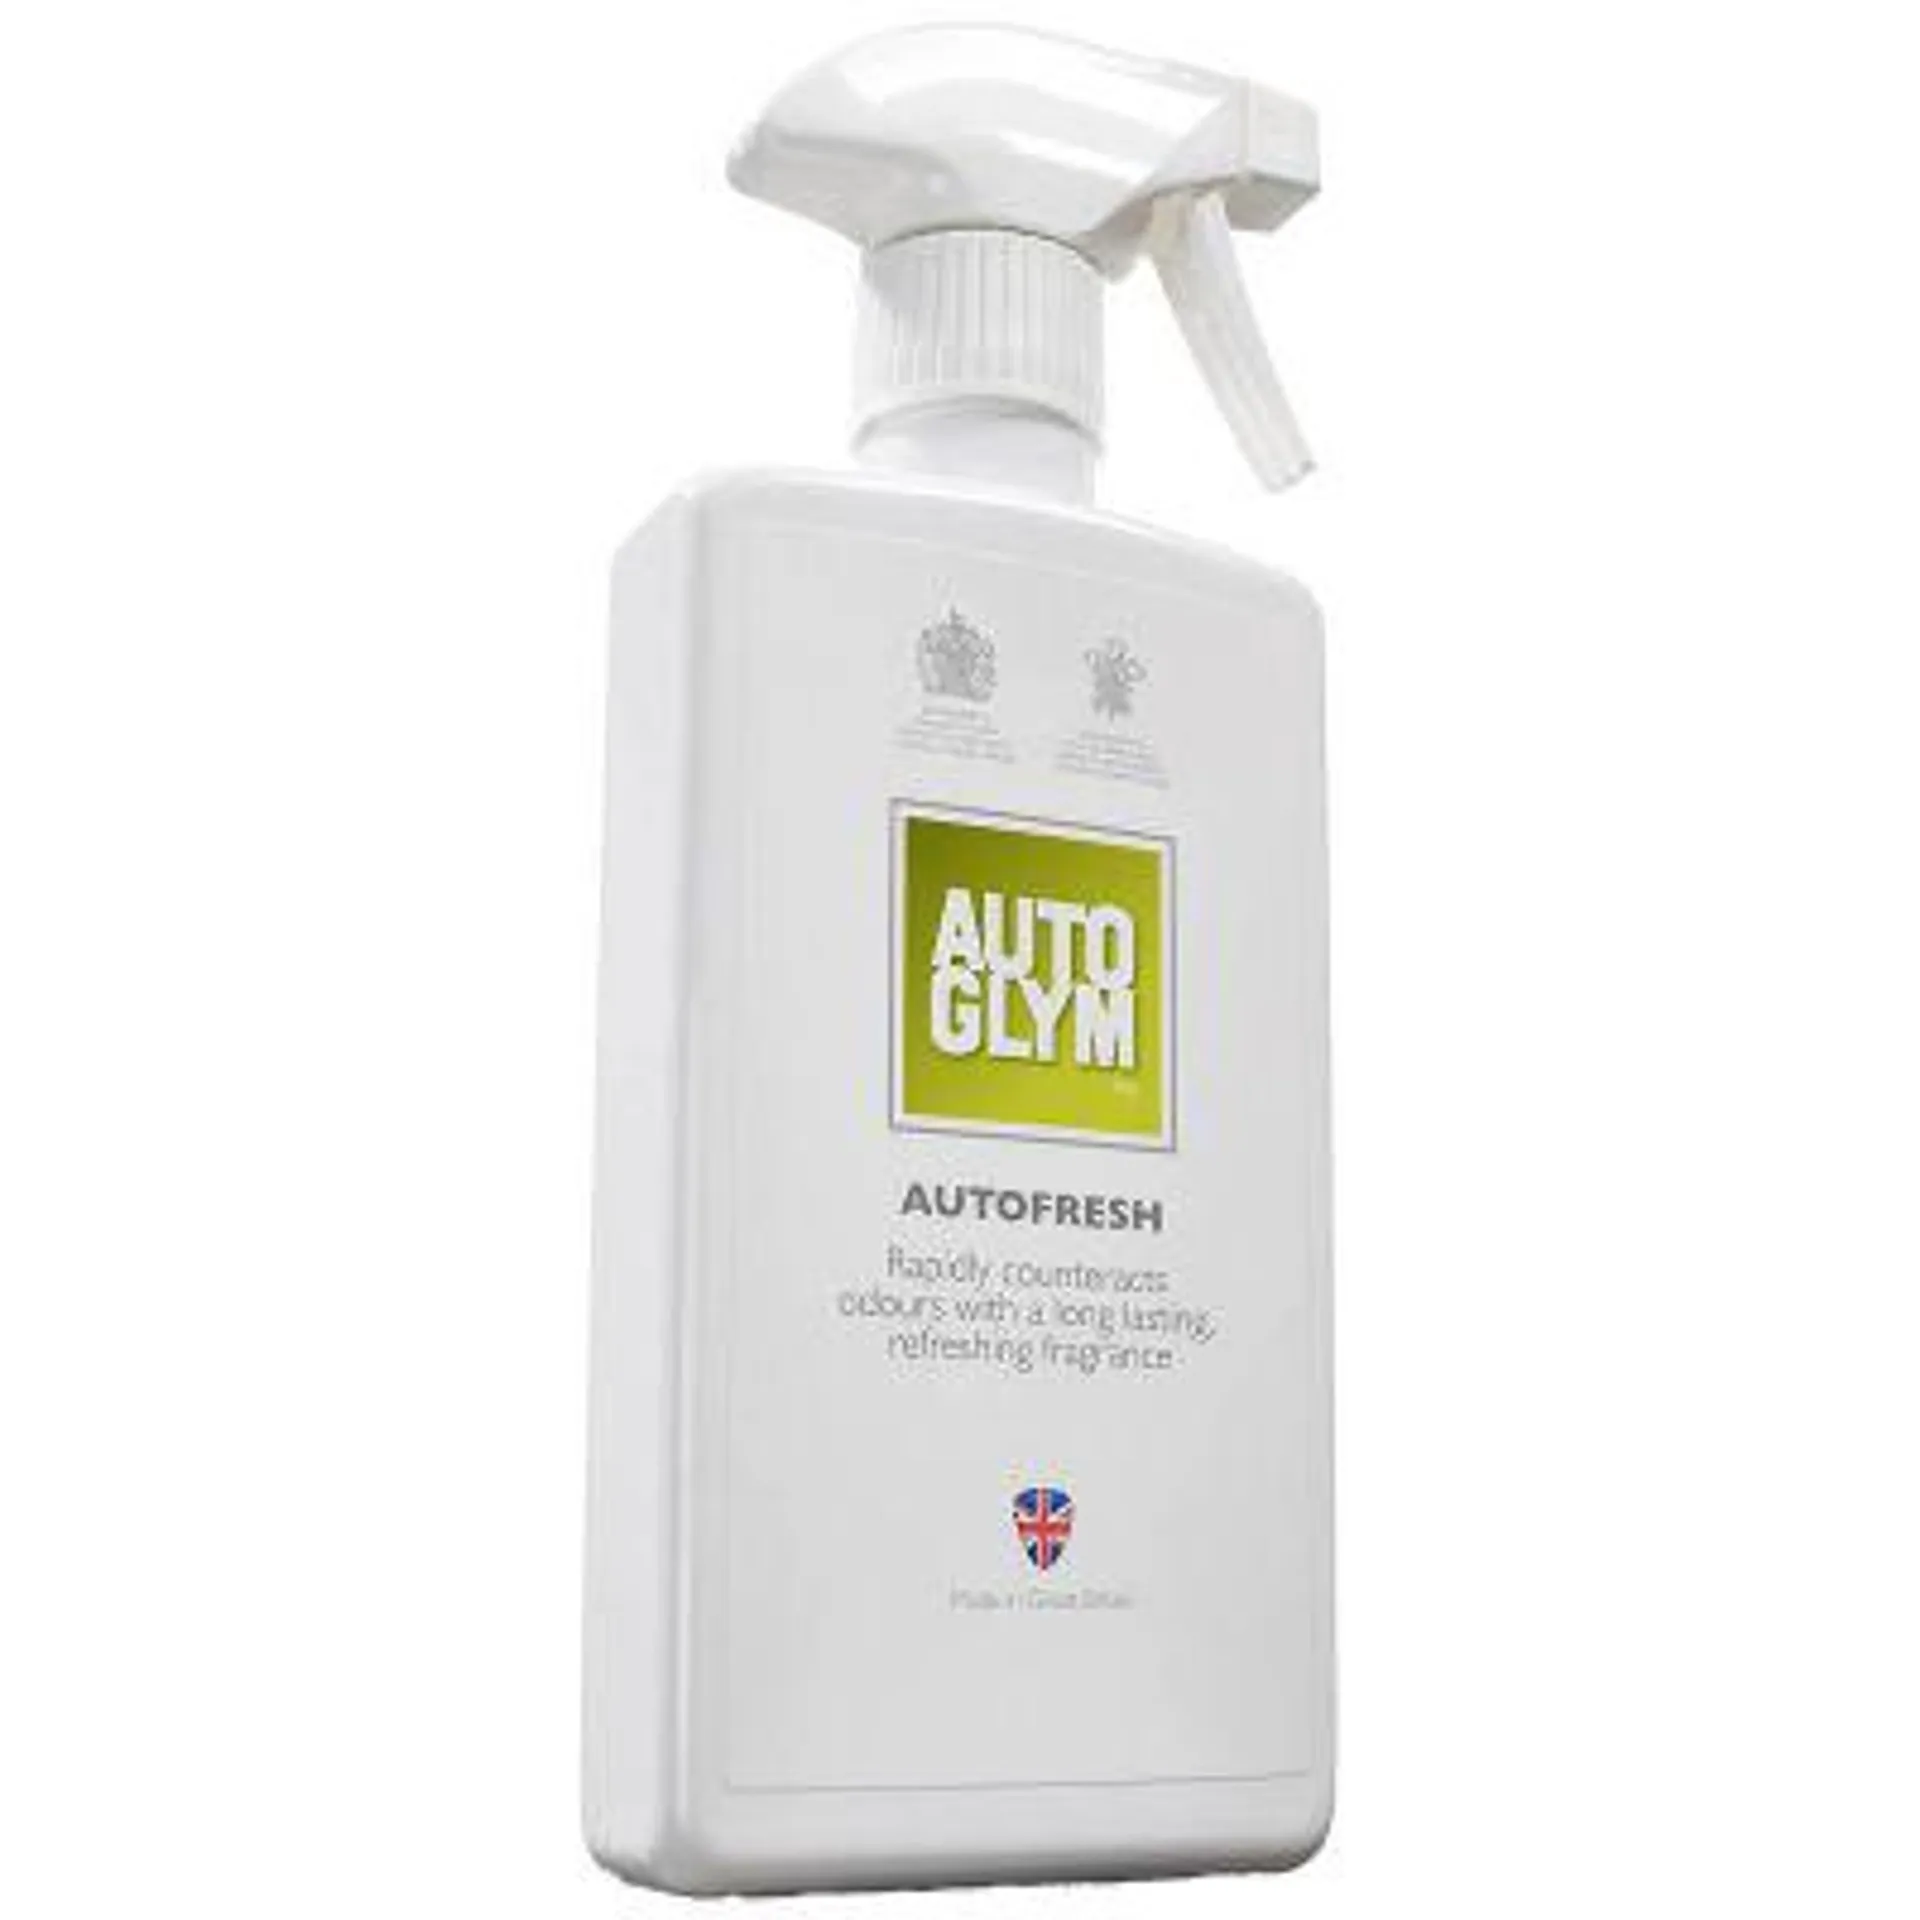 autoglym autofresh air freshener 500ml